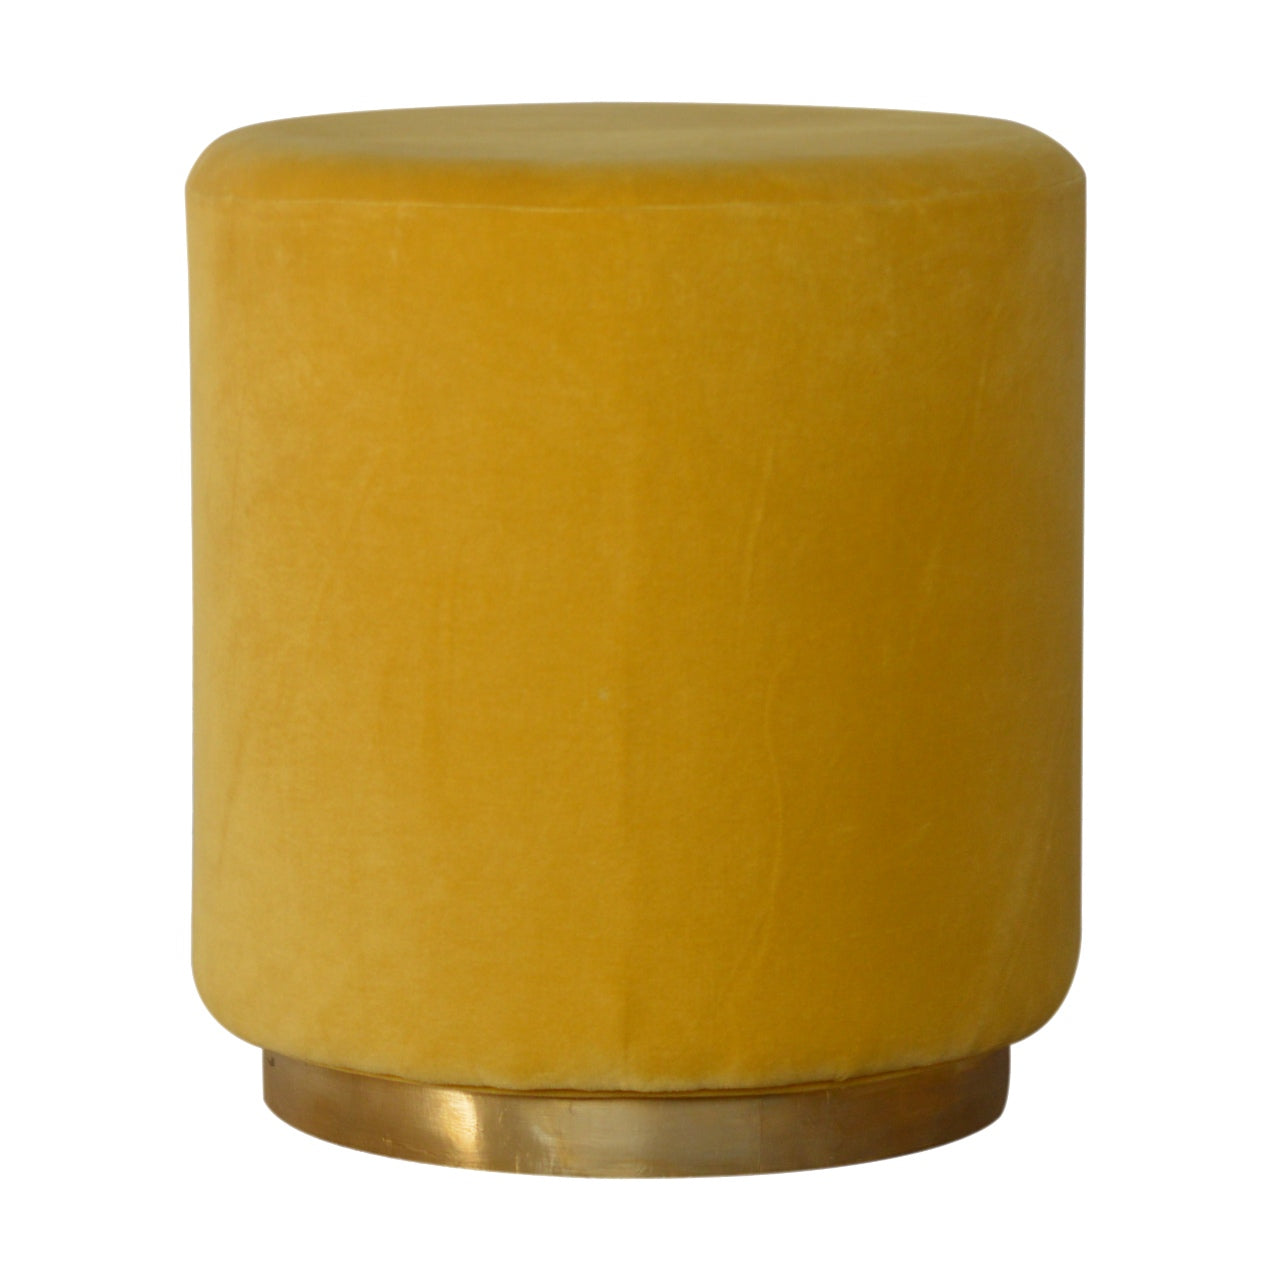 IN818 - Mustard Velvet Footstool with Gold Base